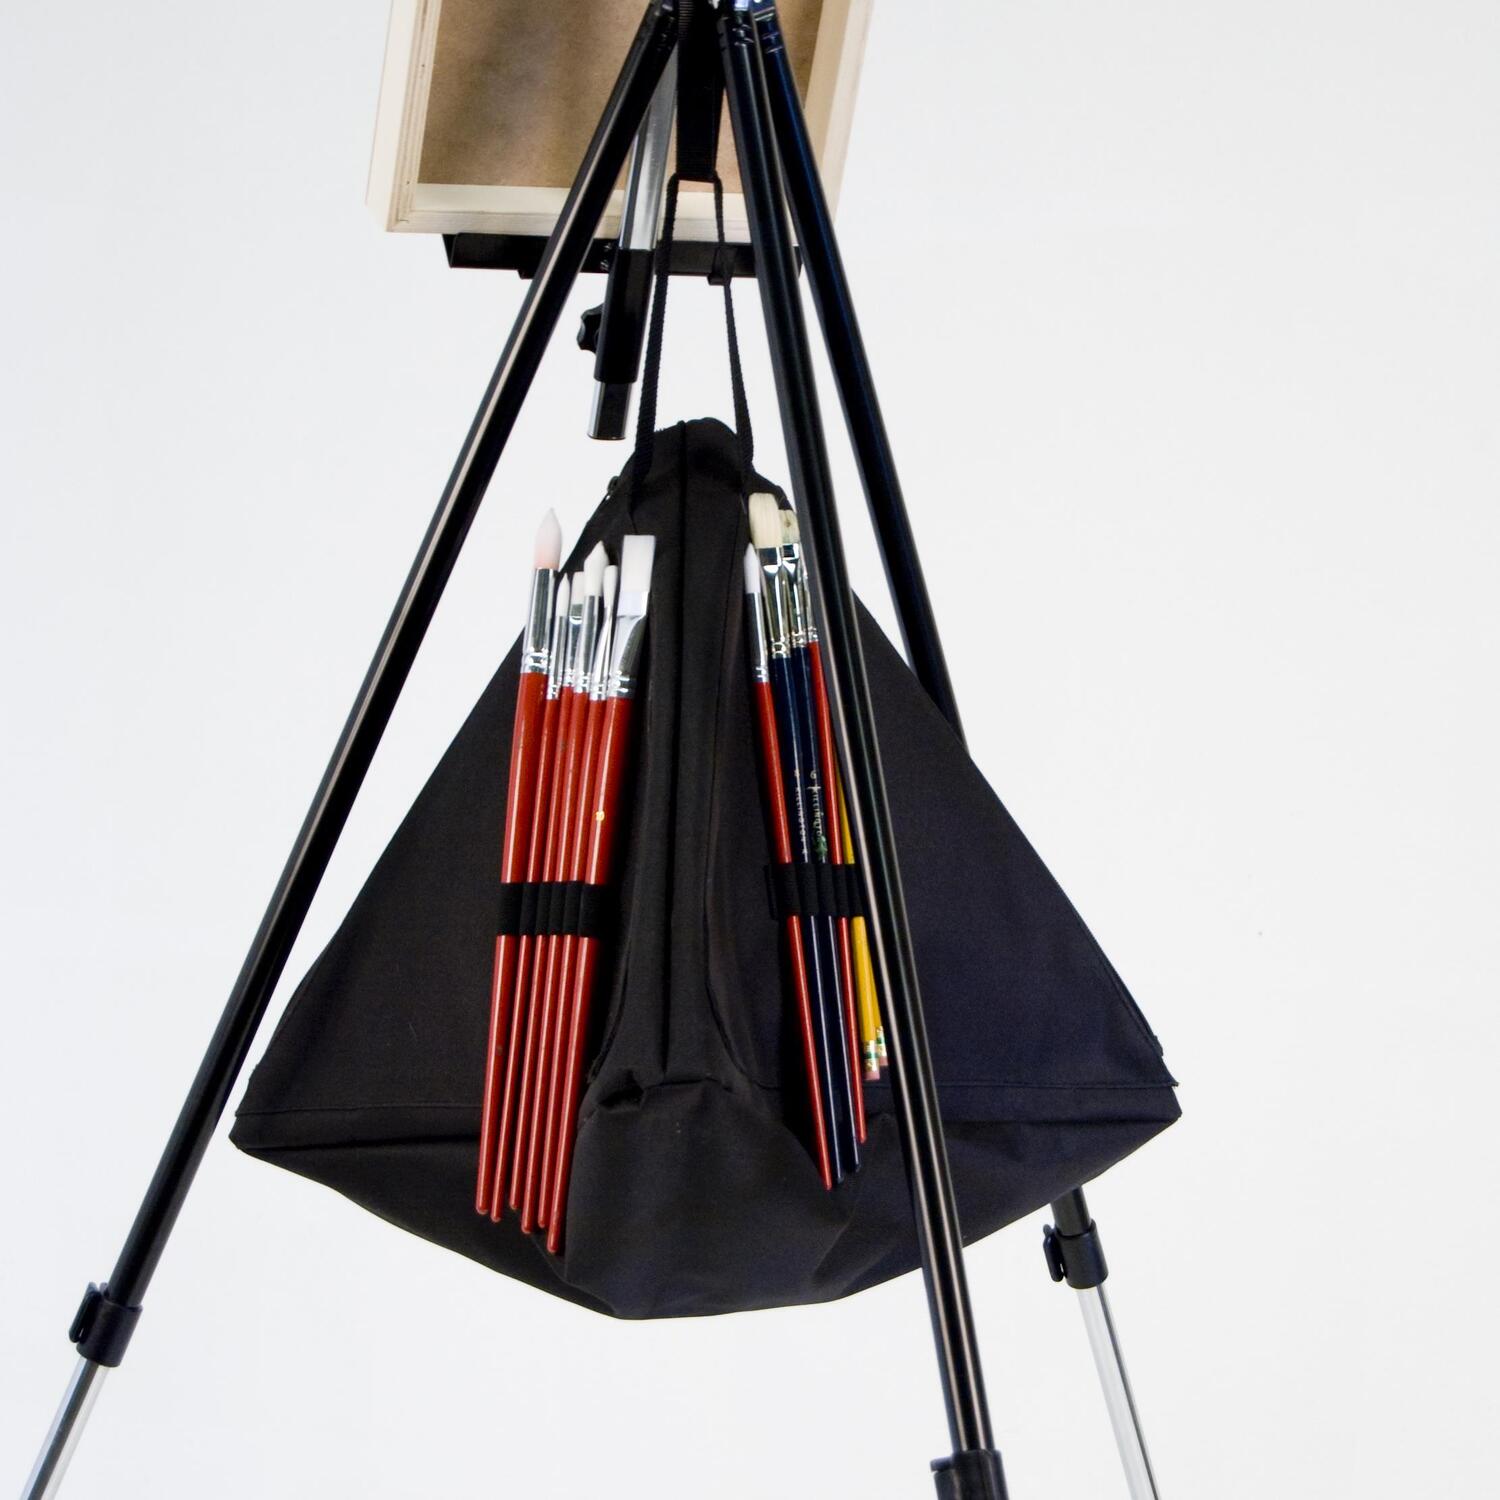 Studio Designs Pyramid Art Supplies Organization, Hanging Storage Bag with Zipper, Black (16" W)- 18698 - image 4 of 4